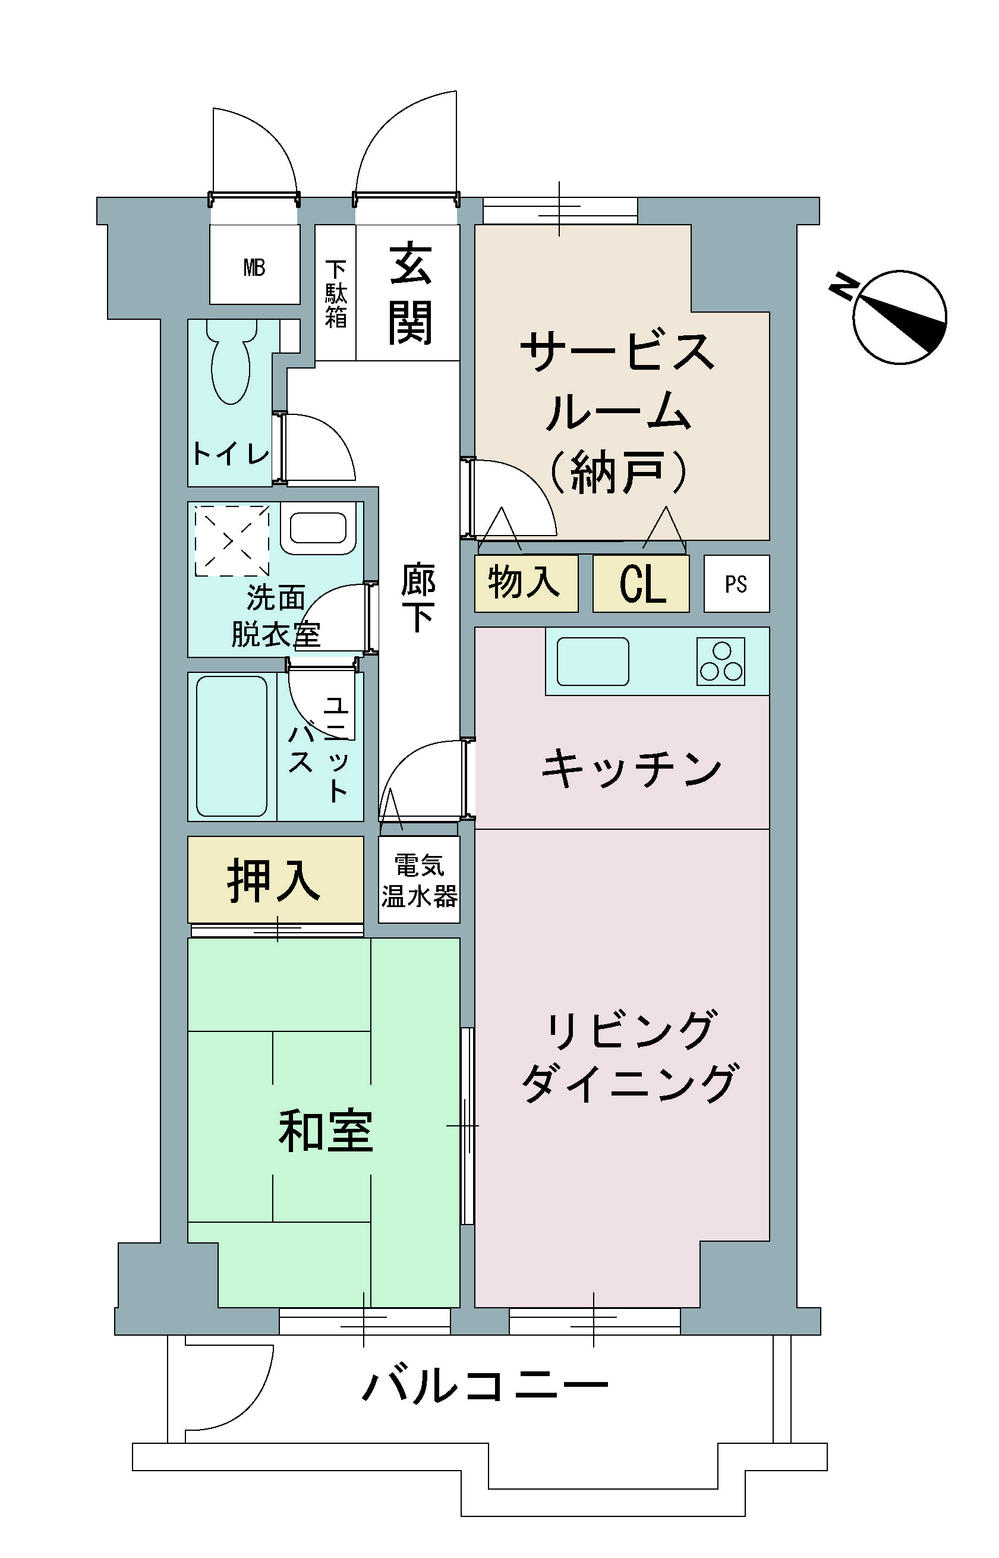 Floor plan. 1LDK + S (storeroom), Price 6.9 million yen, Footprint 56 sq m , Balcony area 7.12 sq m